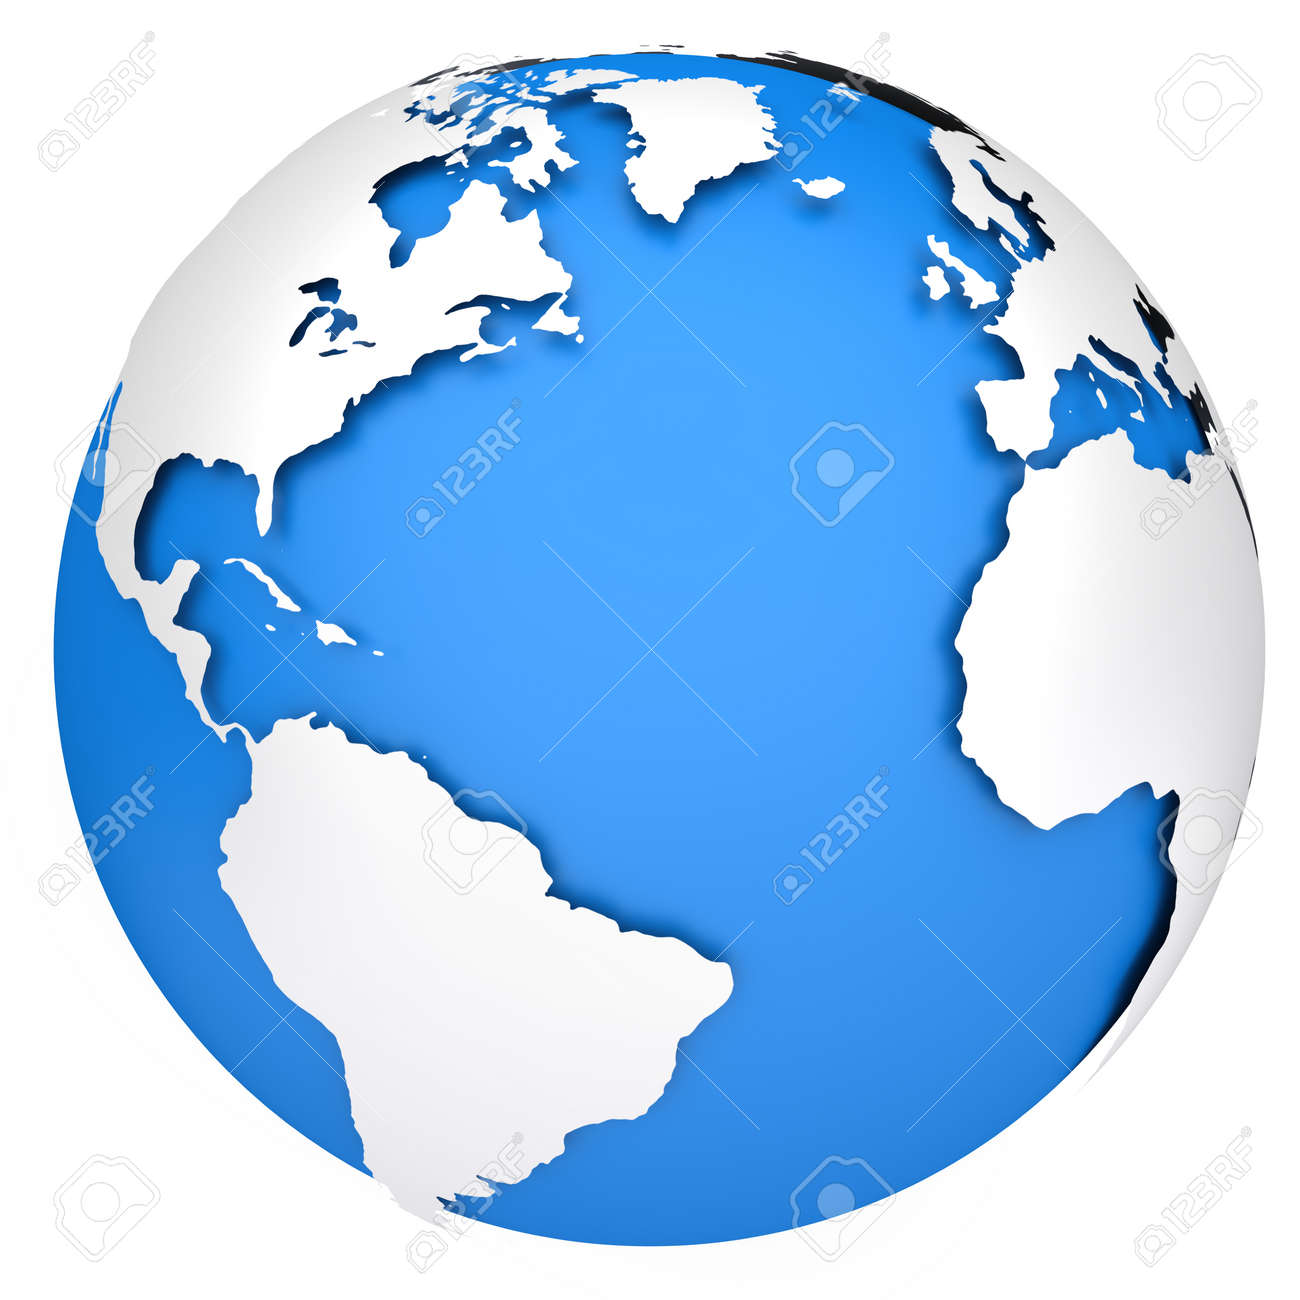 14325446-earth-planet-globe-side-of-the-atlantic-ocean-3d-rendered-image.jpg